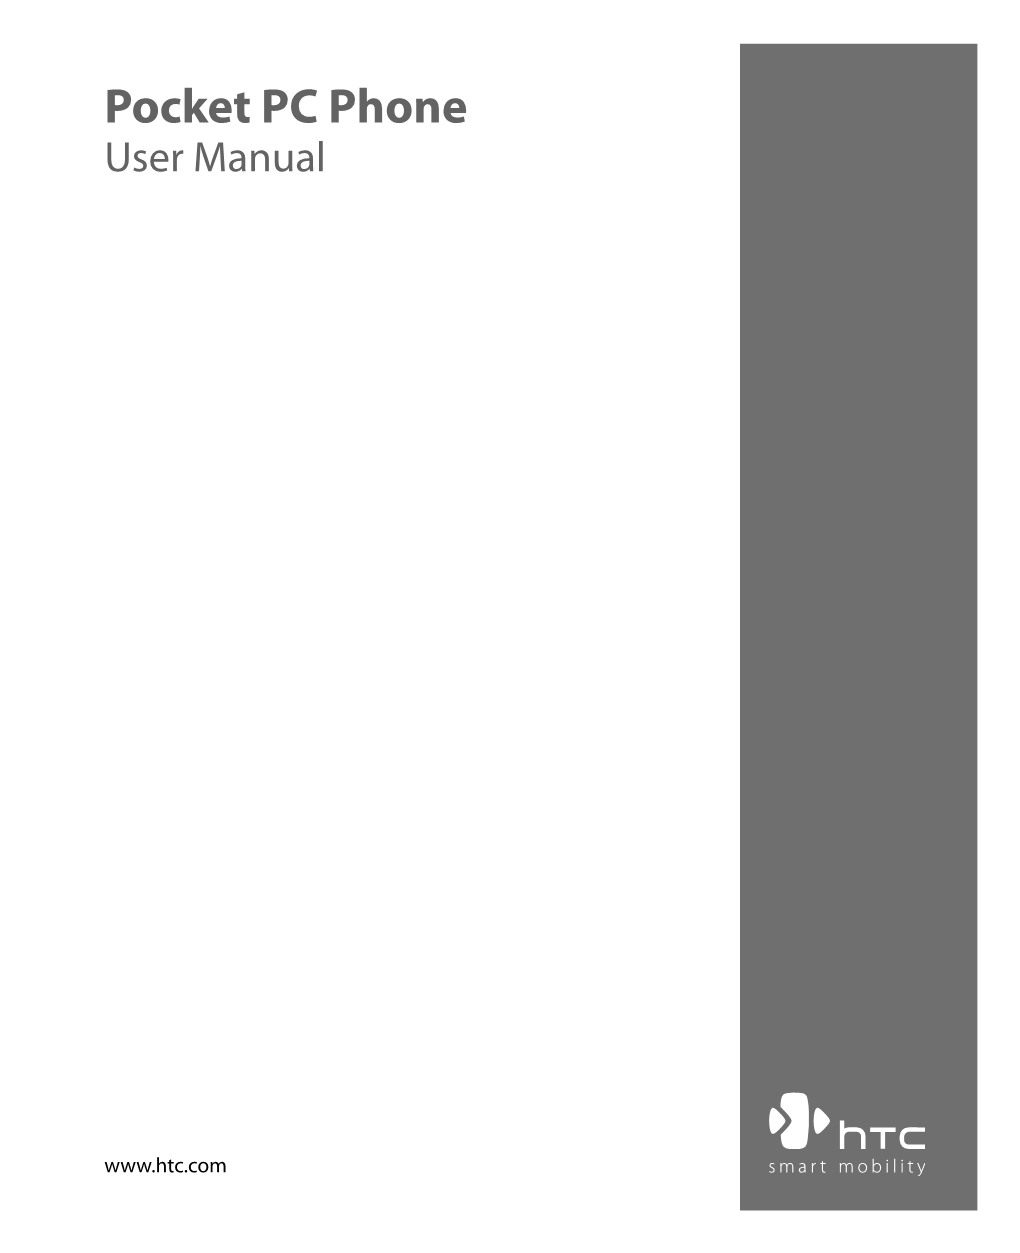 Pocket PC Phone User Manual